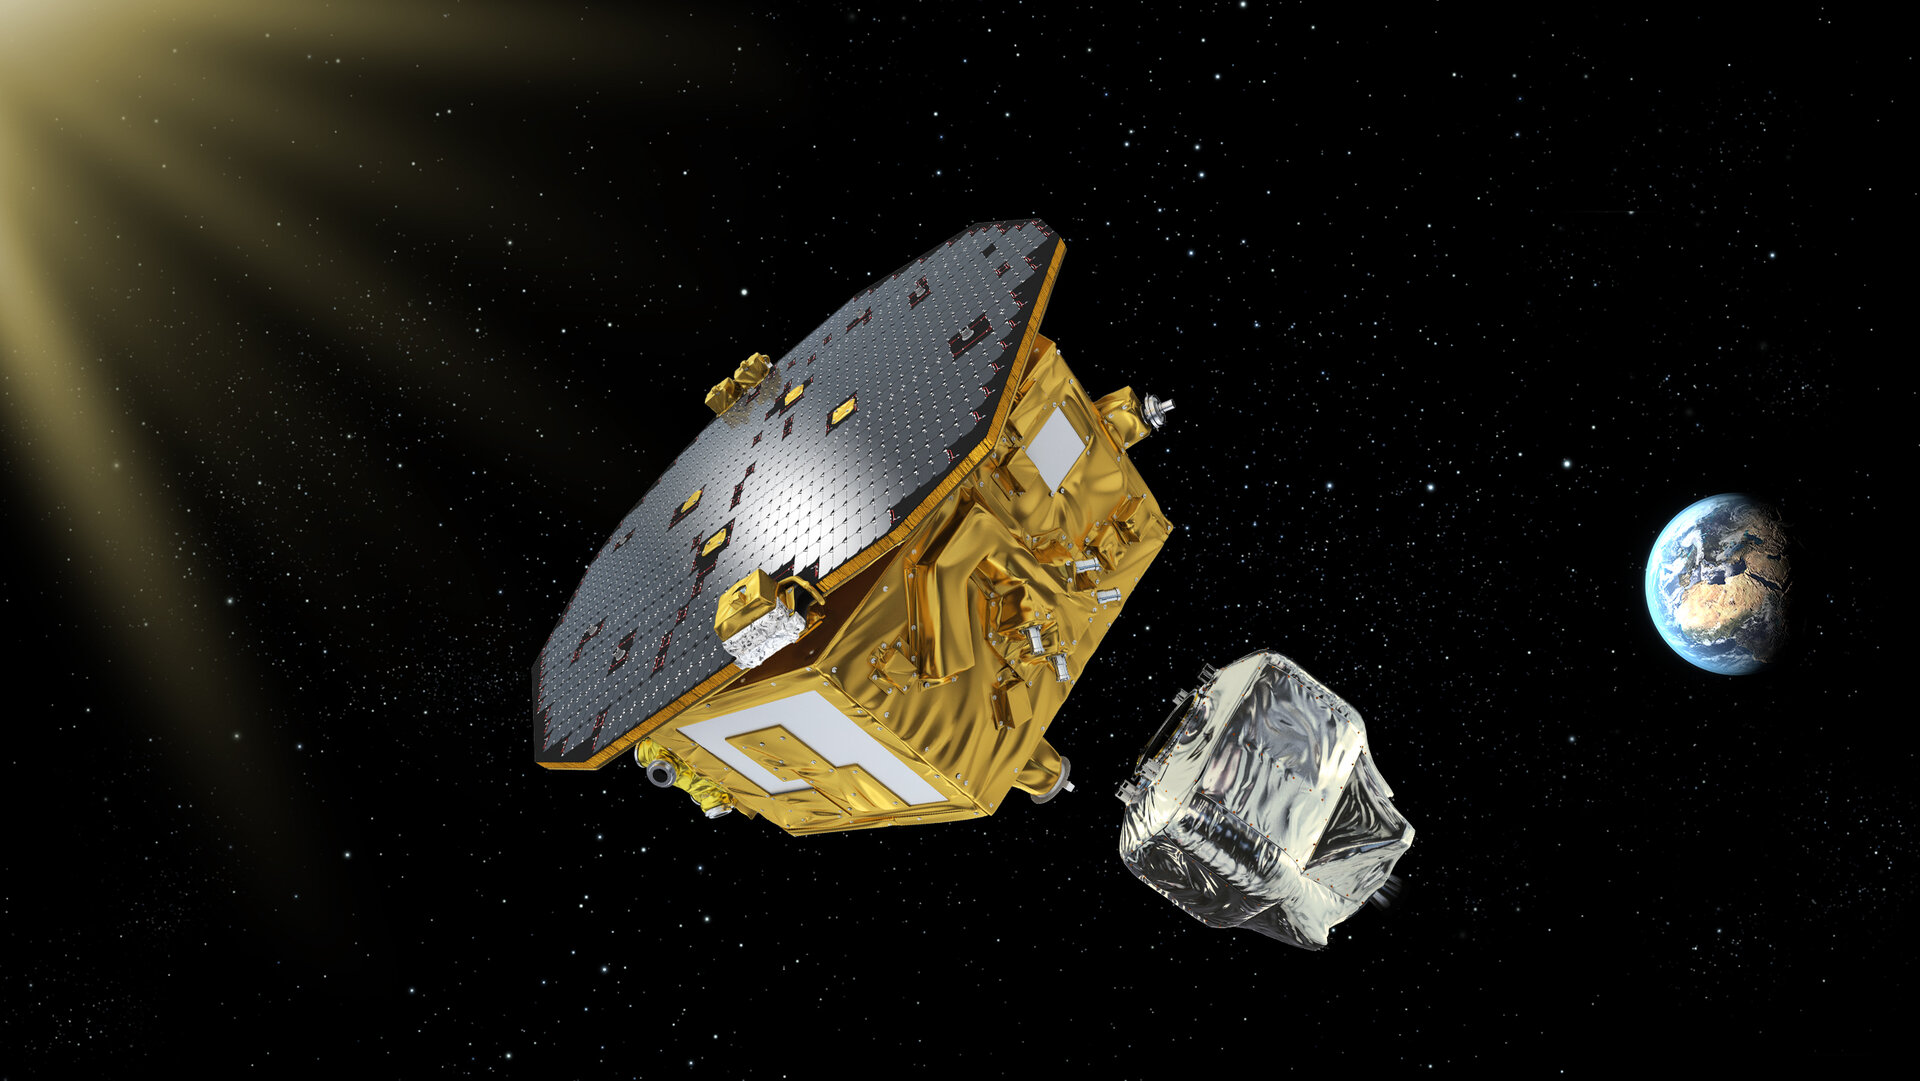 Lisa Pathfinder propulsion module separation